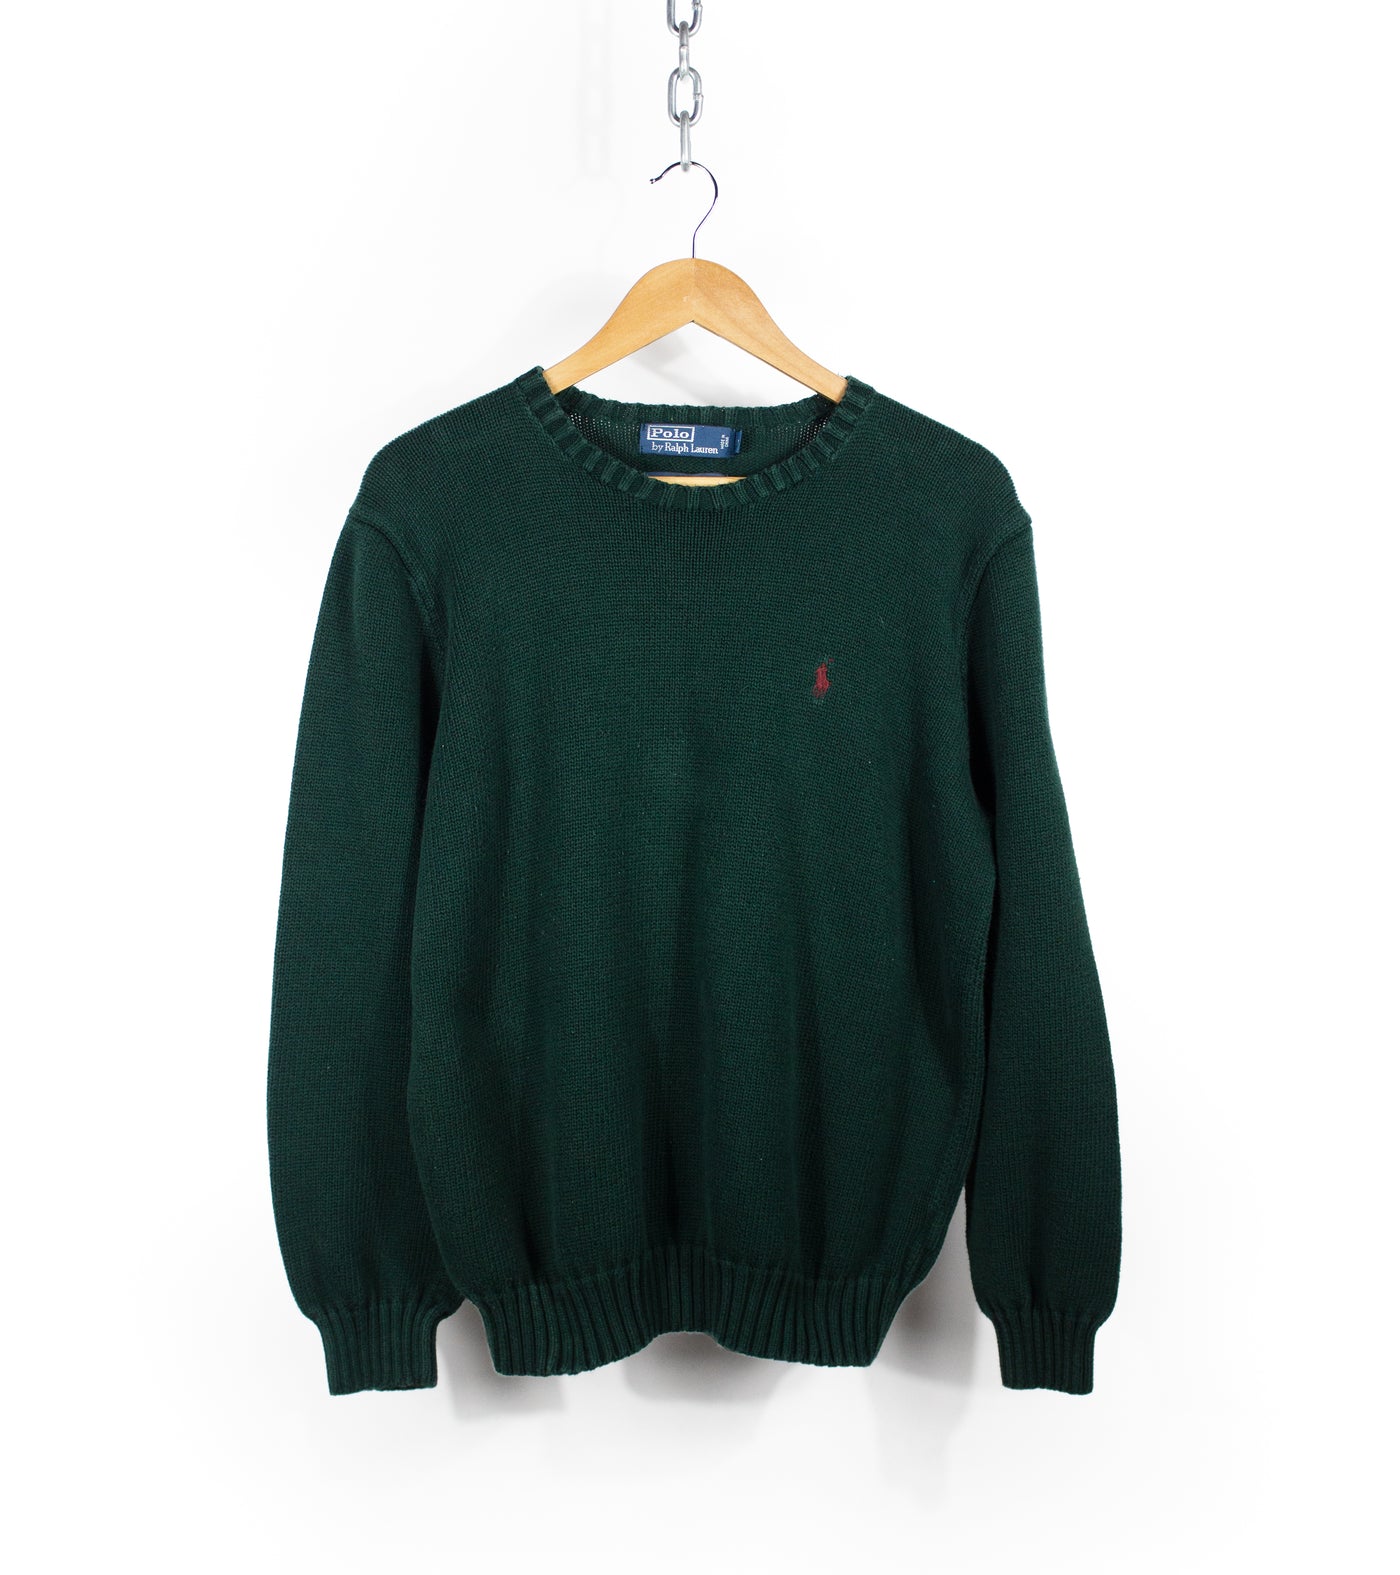 Vintage 90s Polo Ralph Lauren Sweater